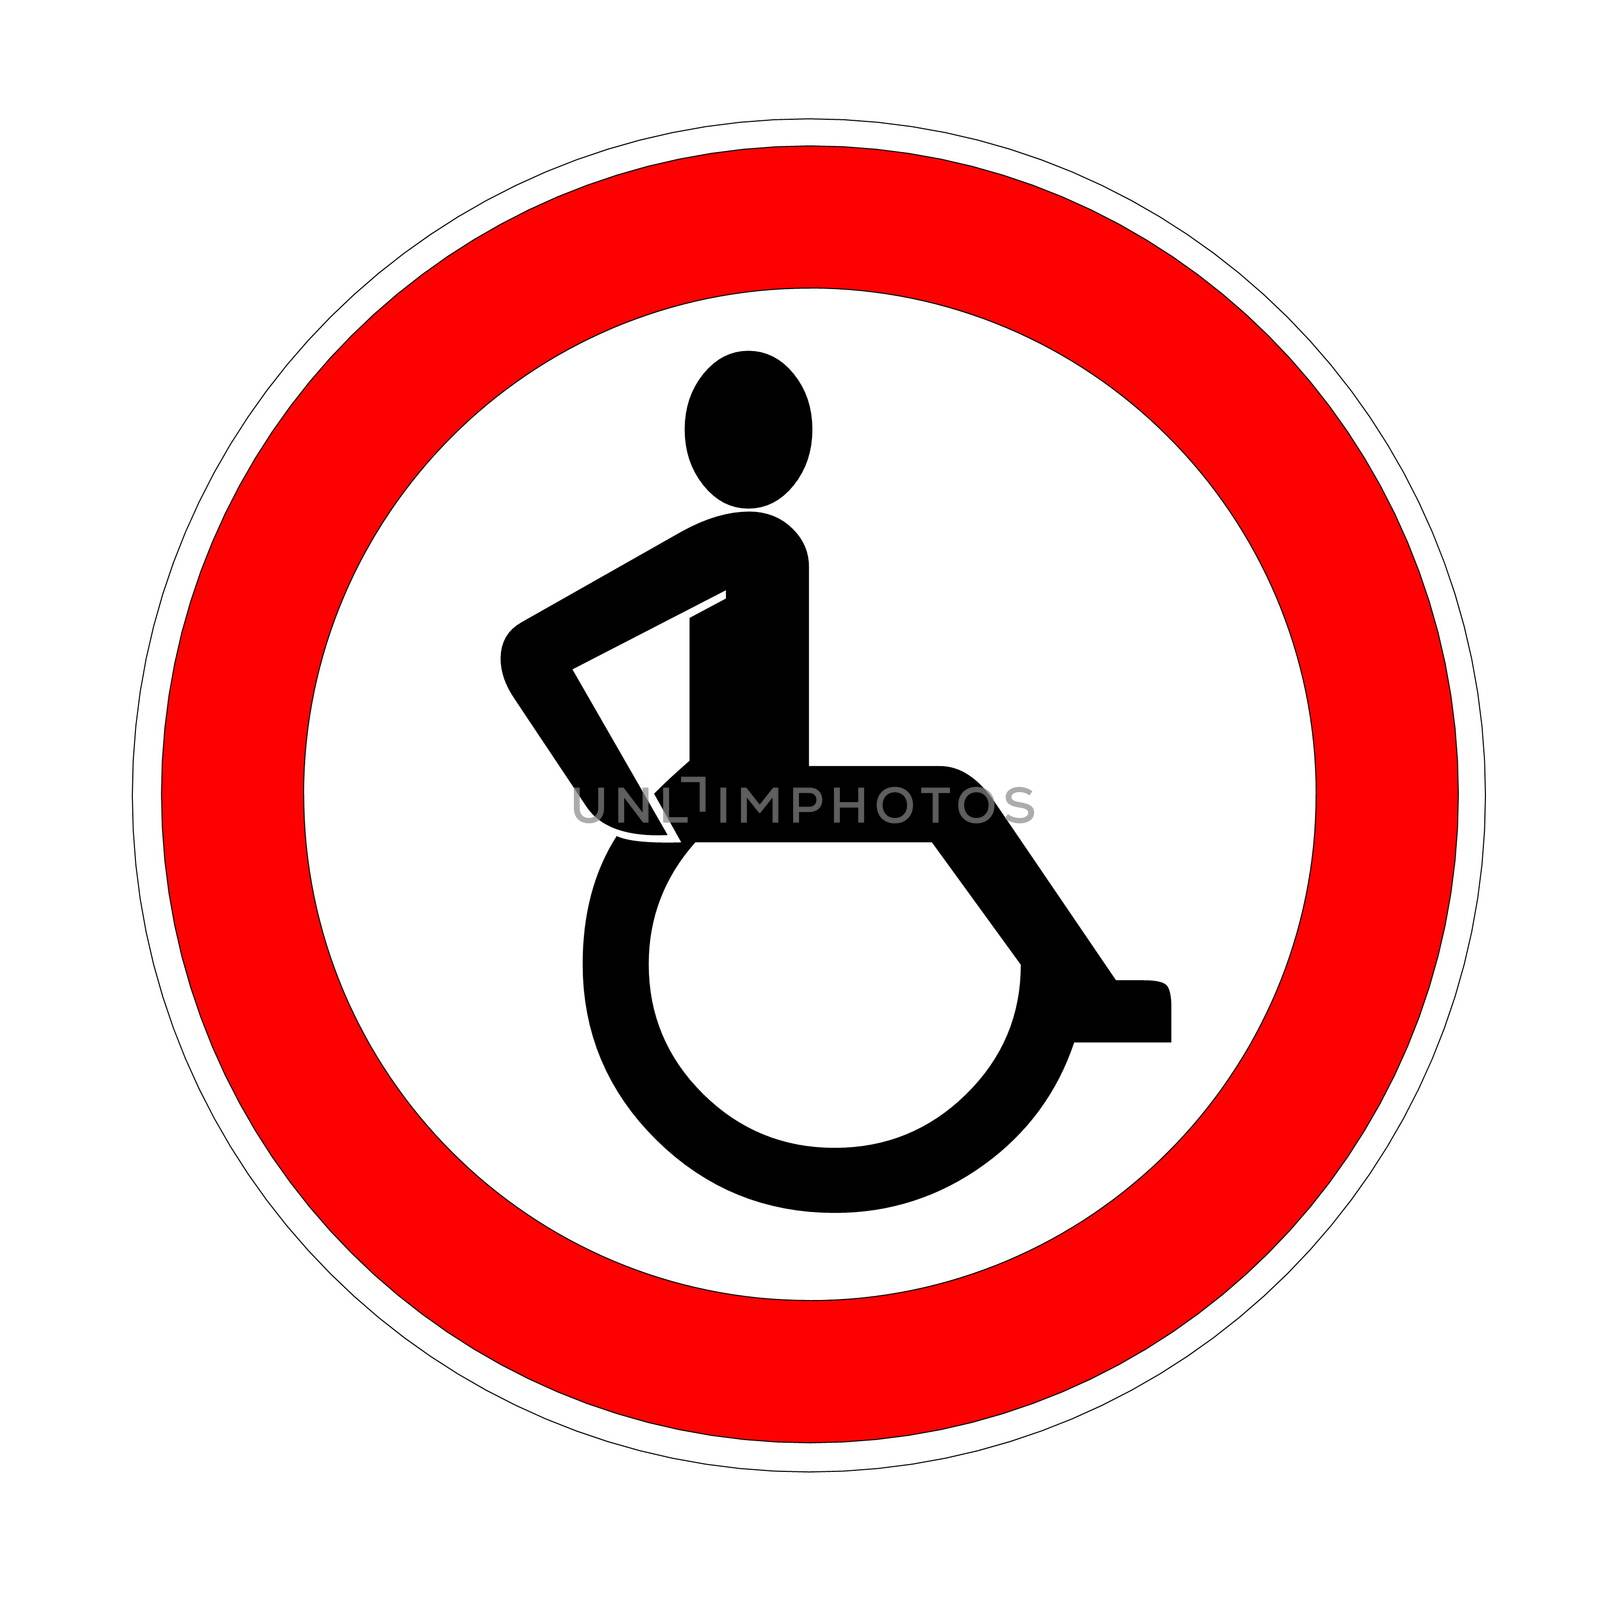 Handicap sign by Elenaphotos21